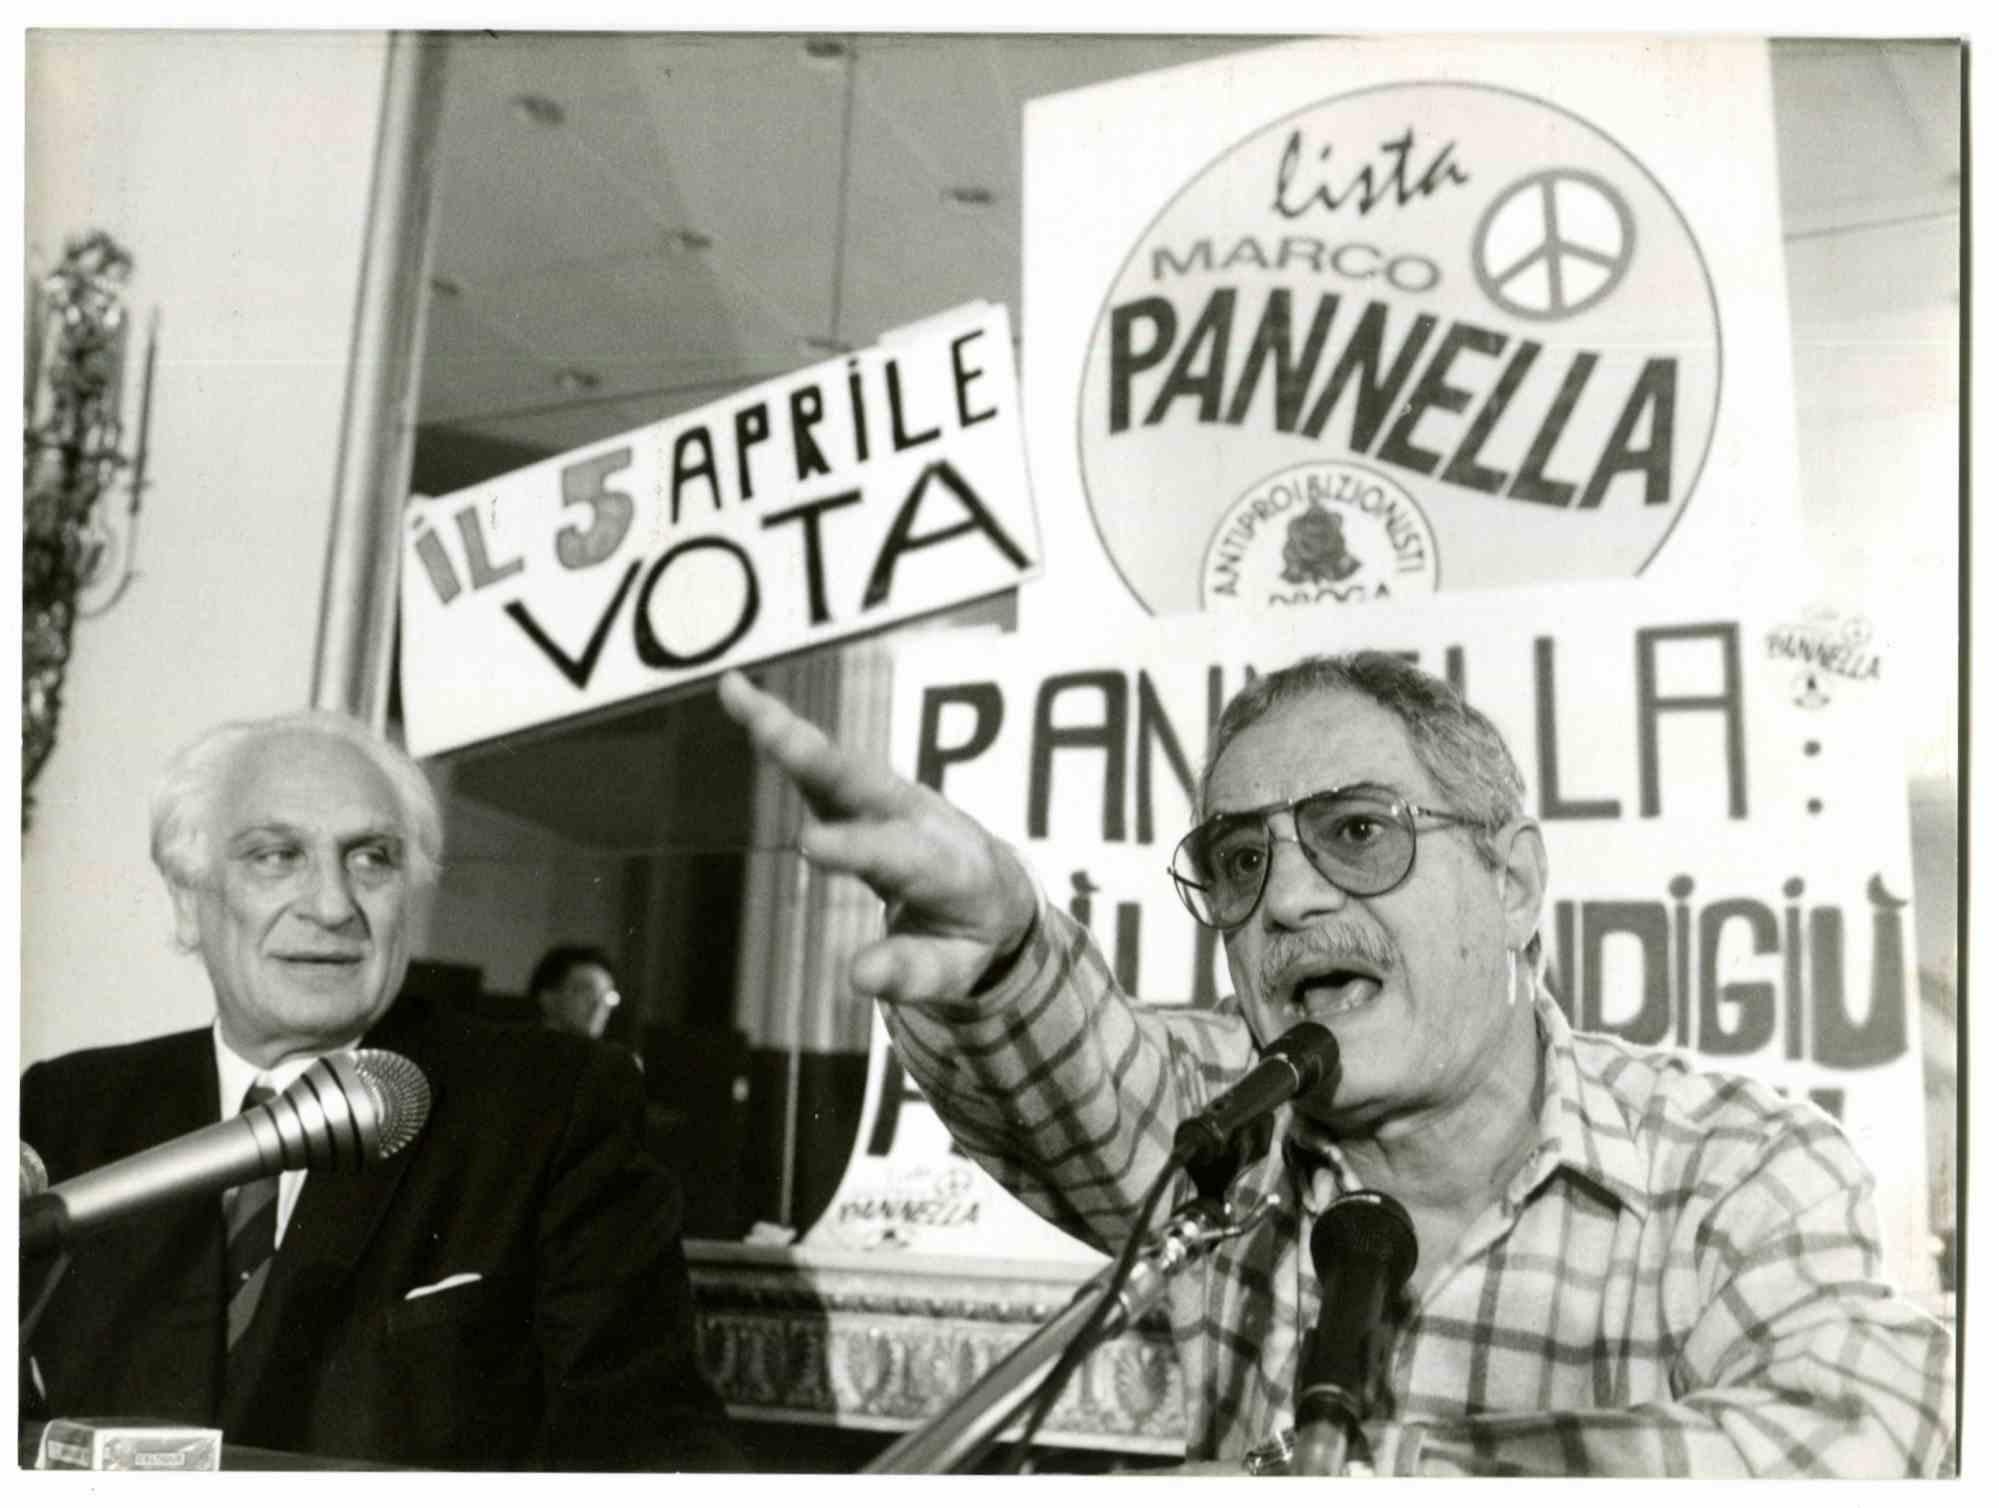 Nino Manfredi et Marco Pannella - 1970